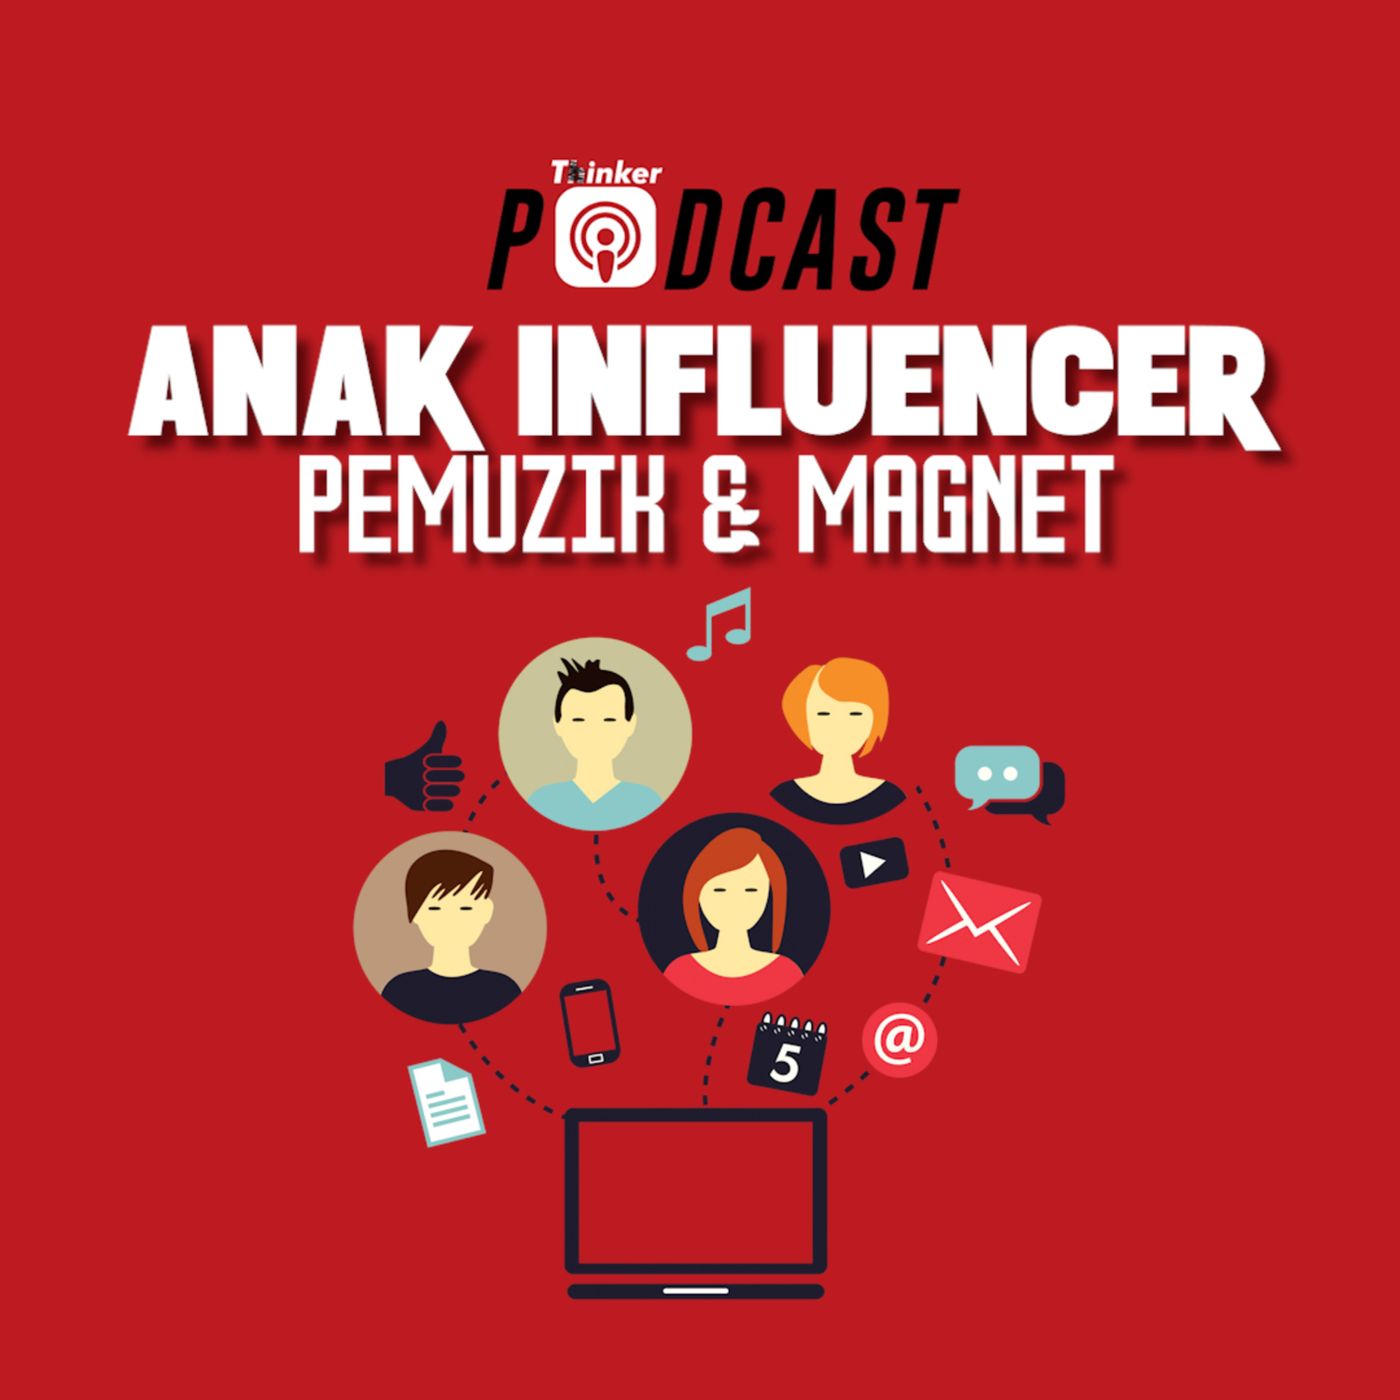 ANAK INFLUENCER - Pemuzik & Magnet